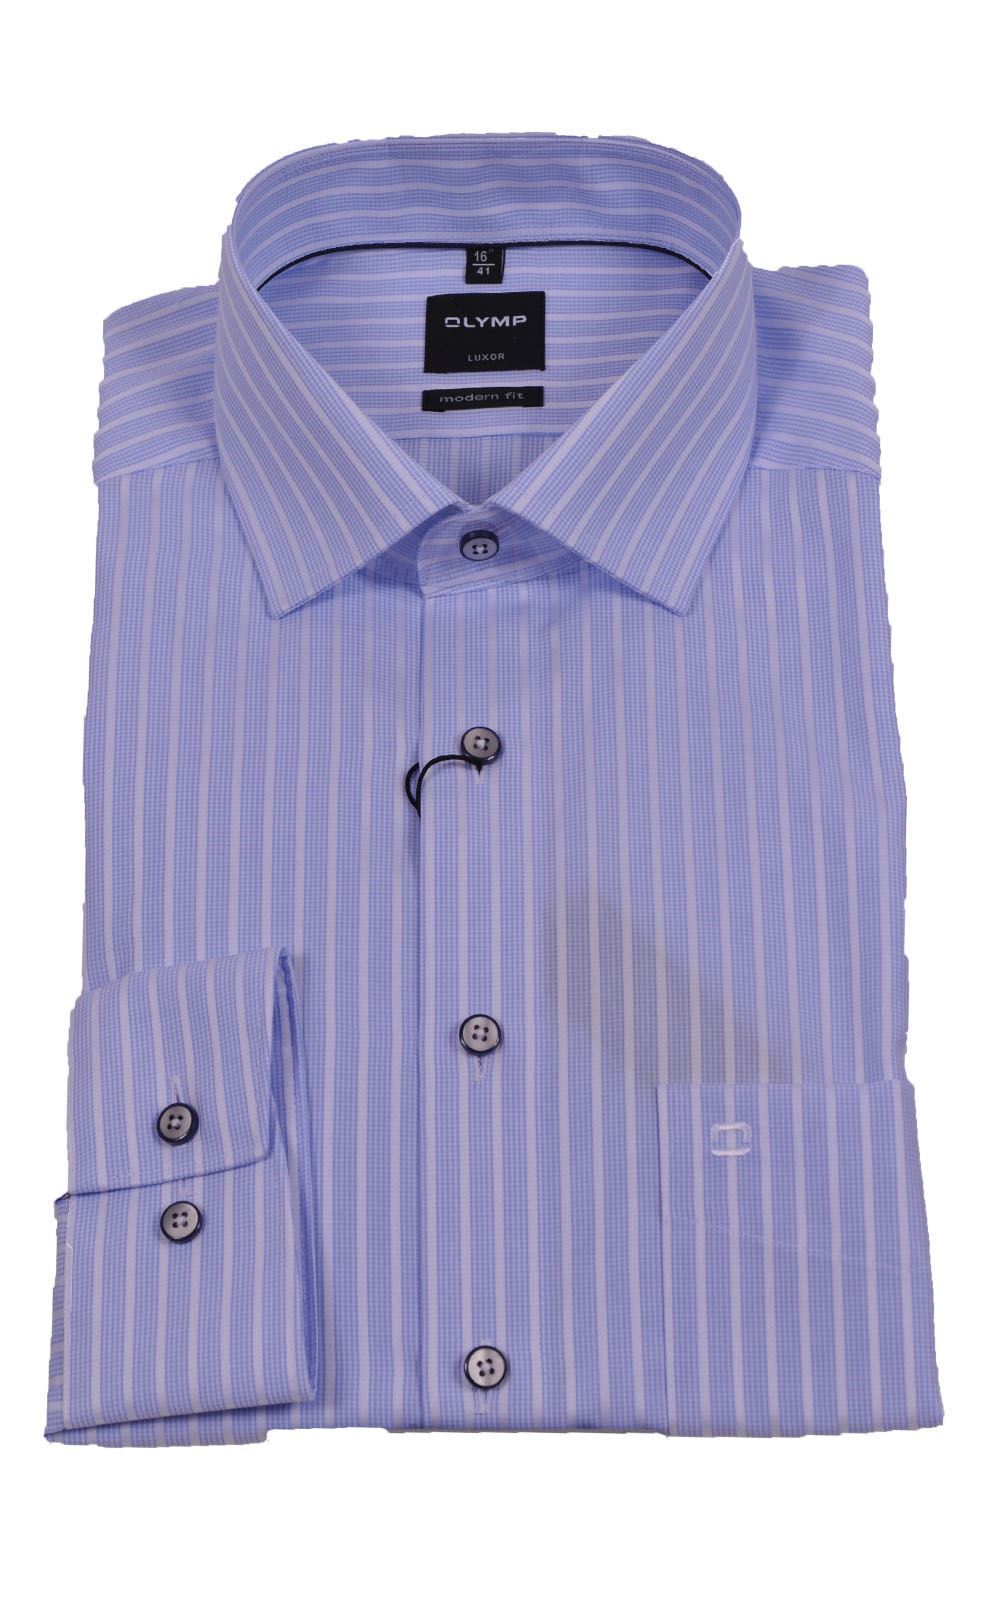 S&T Moore. Olymp Long Sleeve Shirt 1320-54